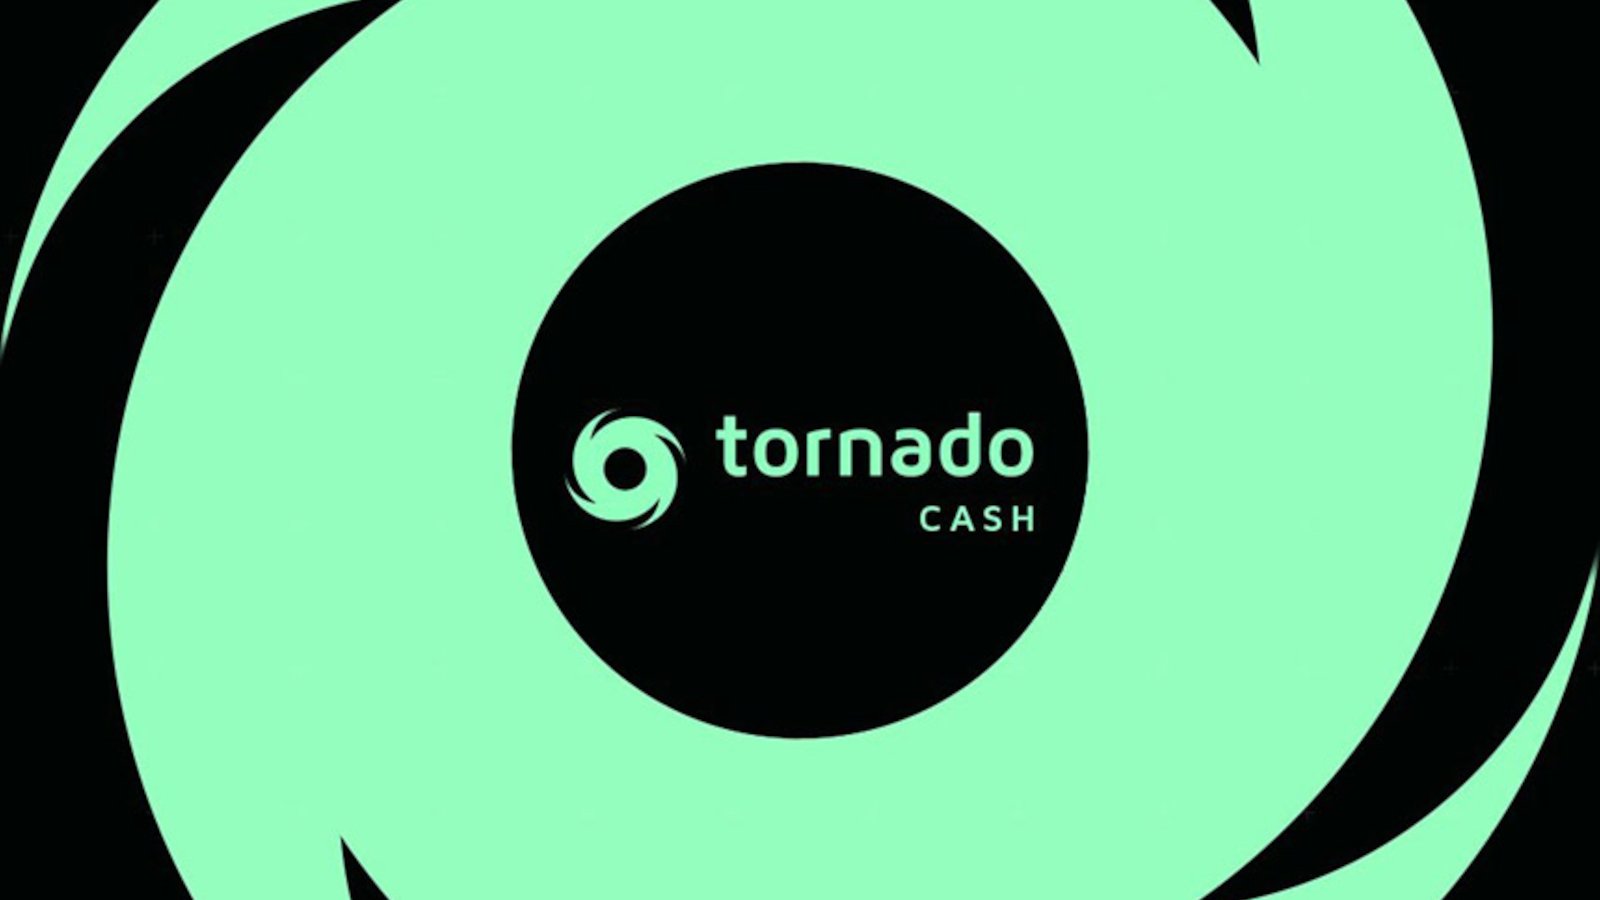 Tornado Cash cryptomixer dev gets 64 months for laundering $2 billion